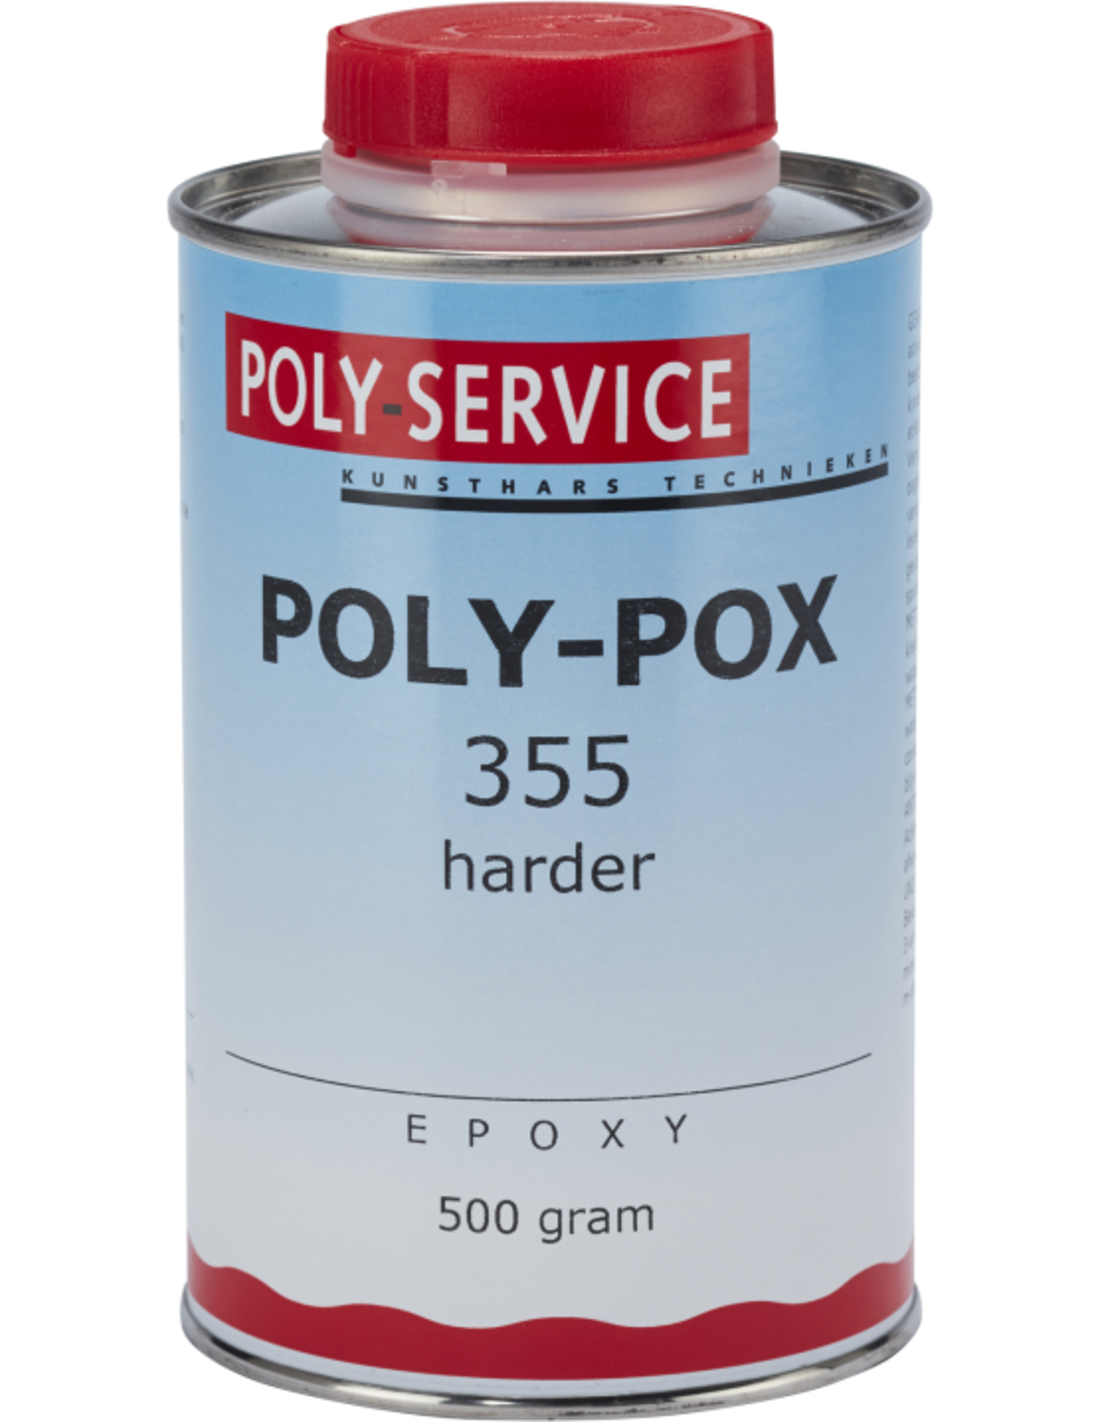 Poly-pox-355-epoxy-harder.png